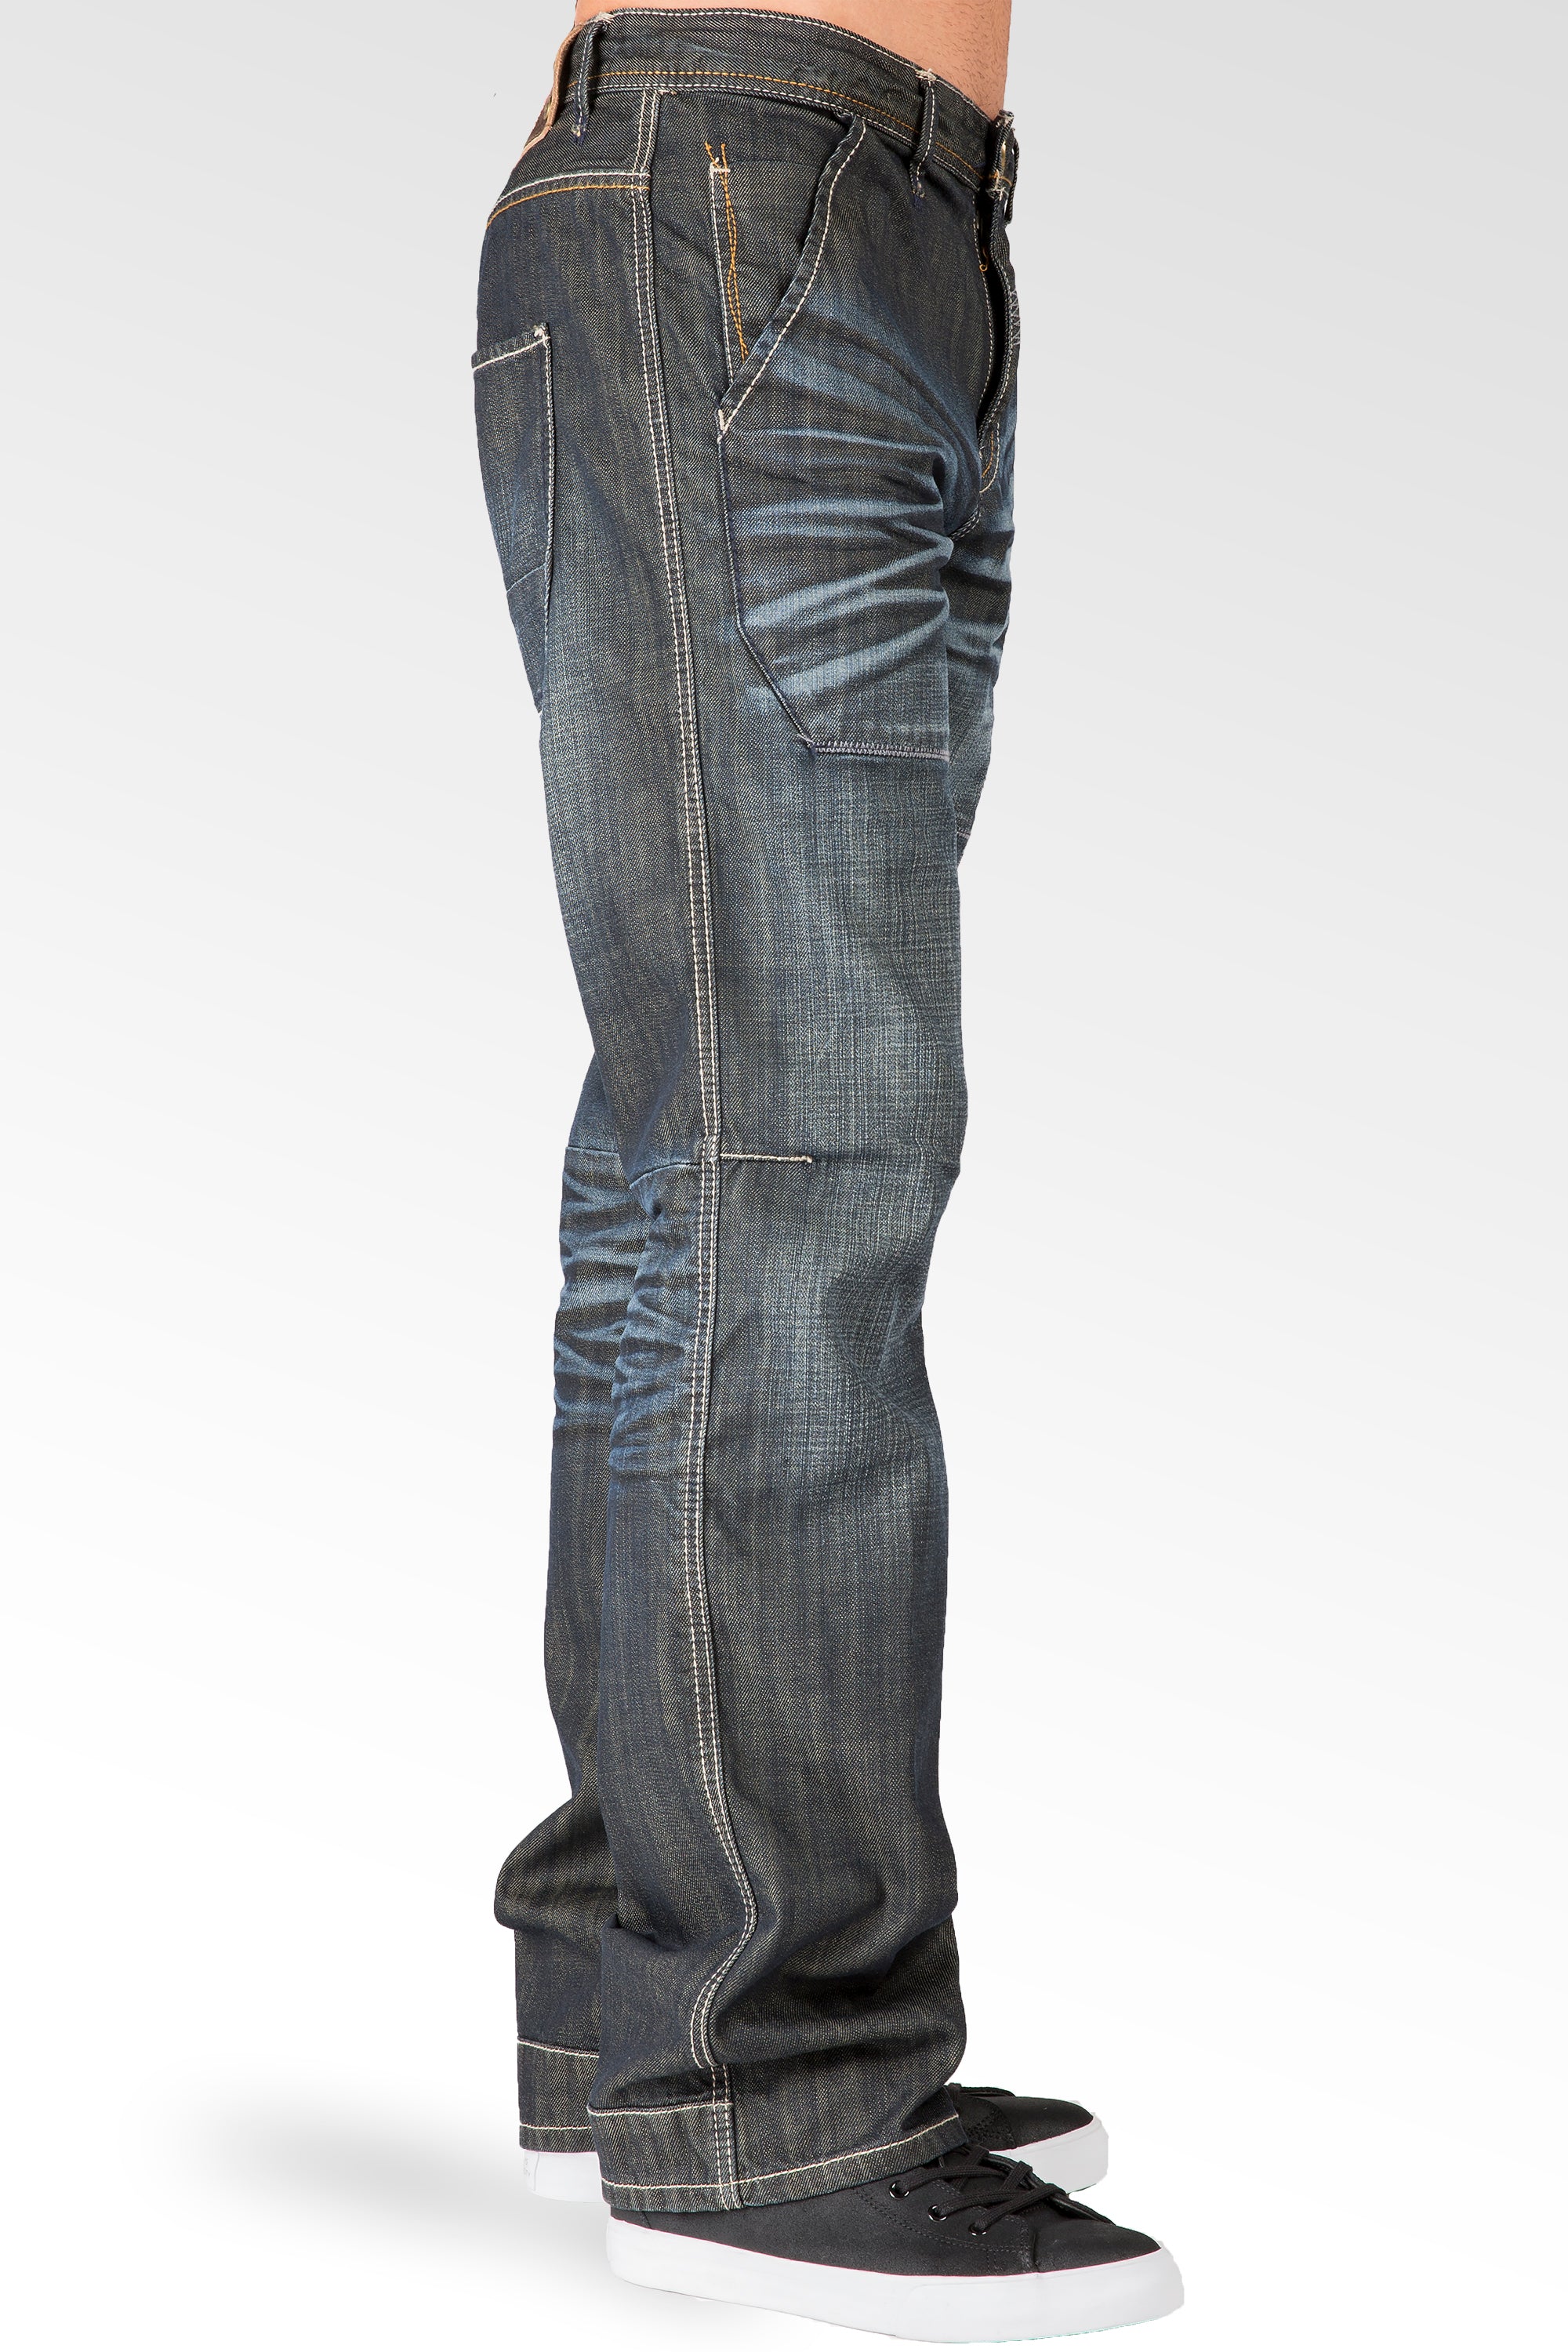 Wrangler Men's Rugged Wear Relaxed Fit Denim Jean - 3500